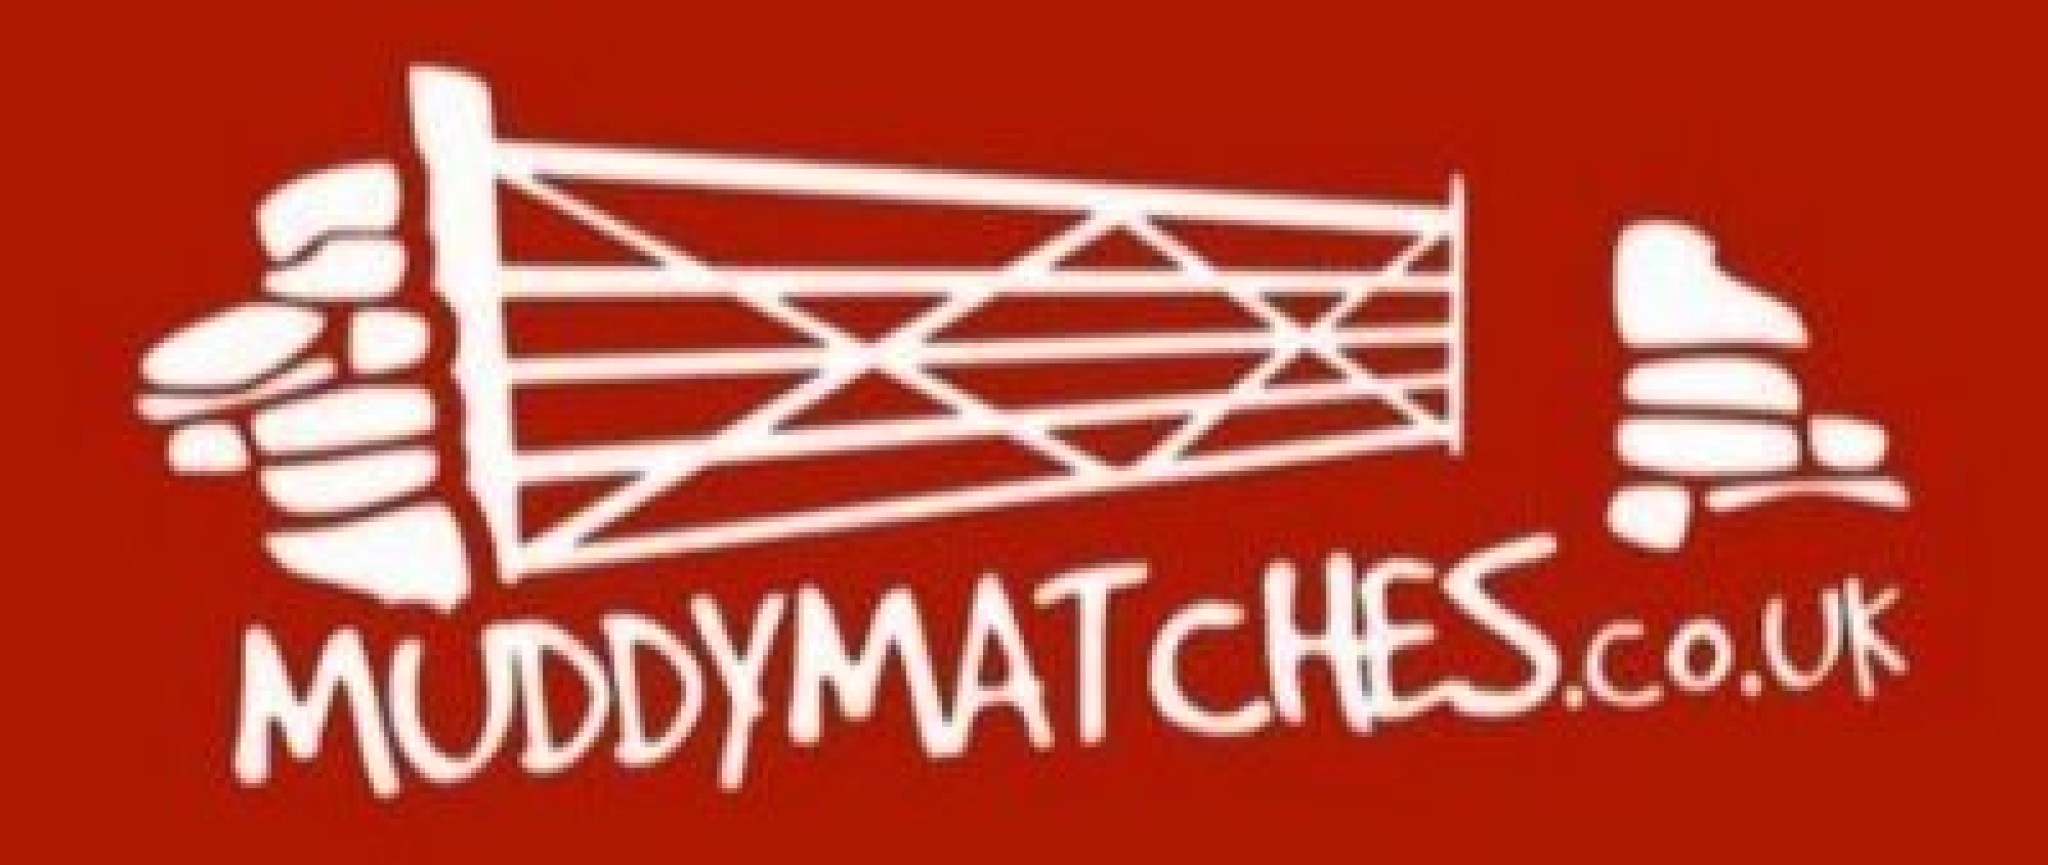 Muddy Matches logo.jpg